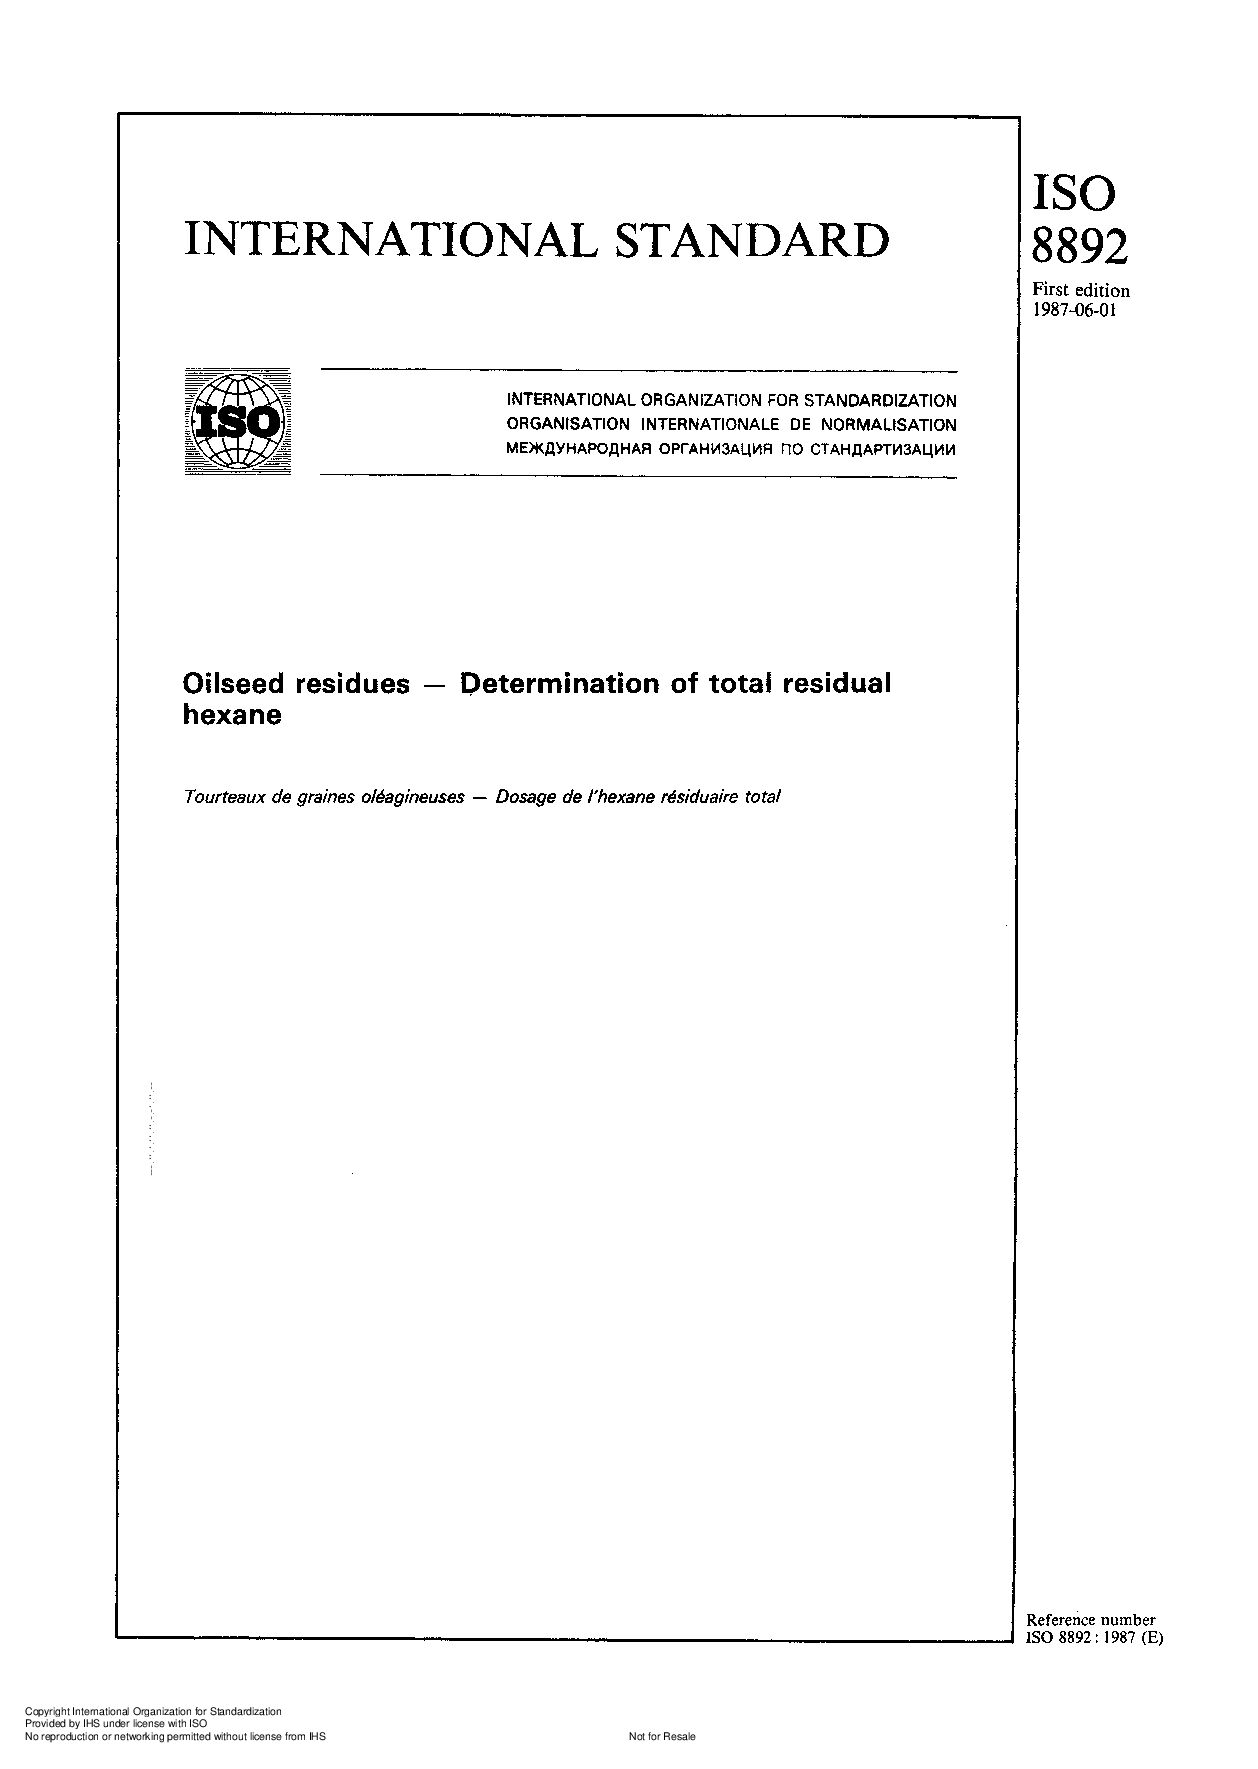 ISO 8892:1987封面图